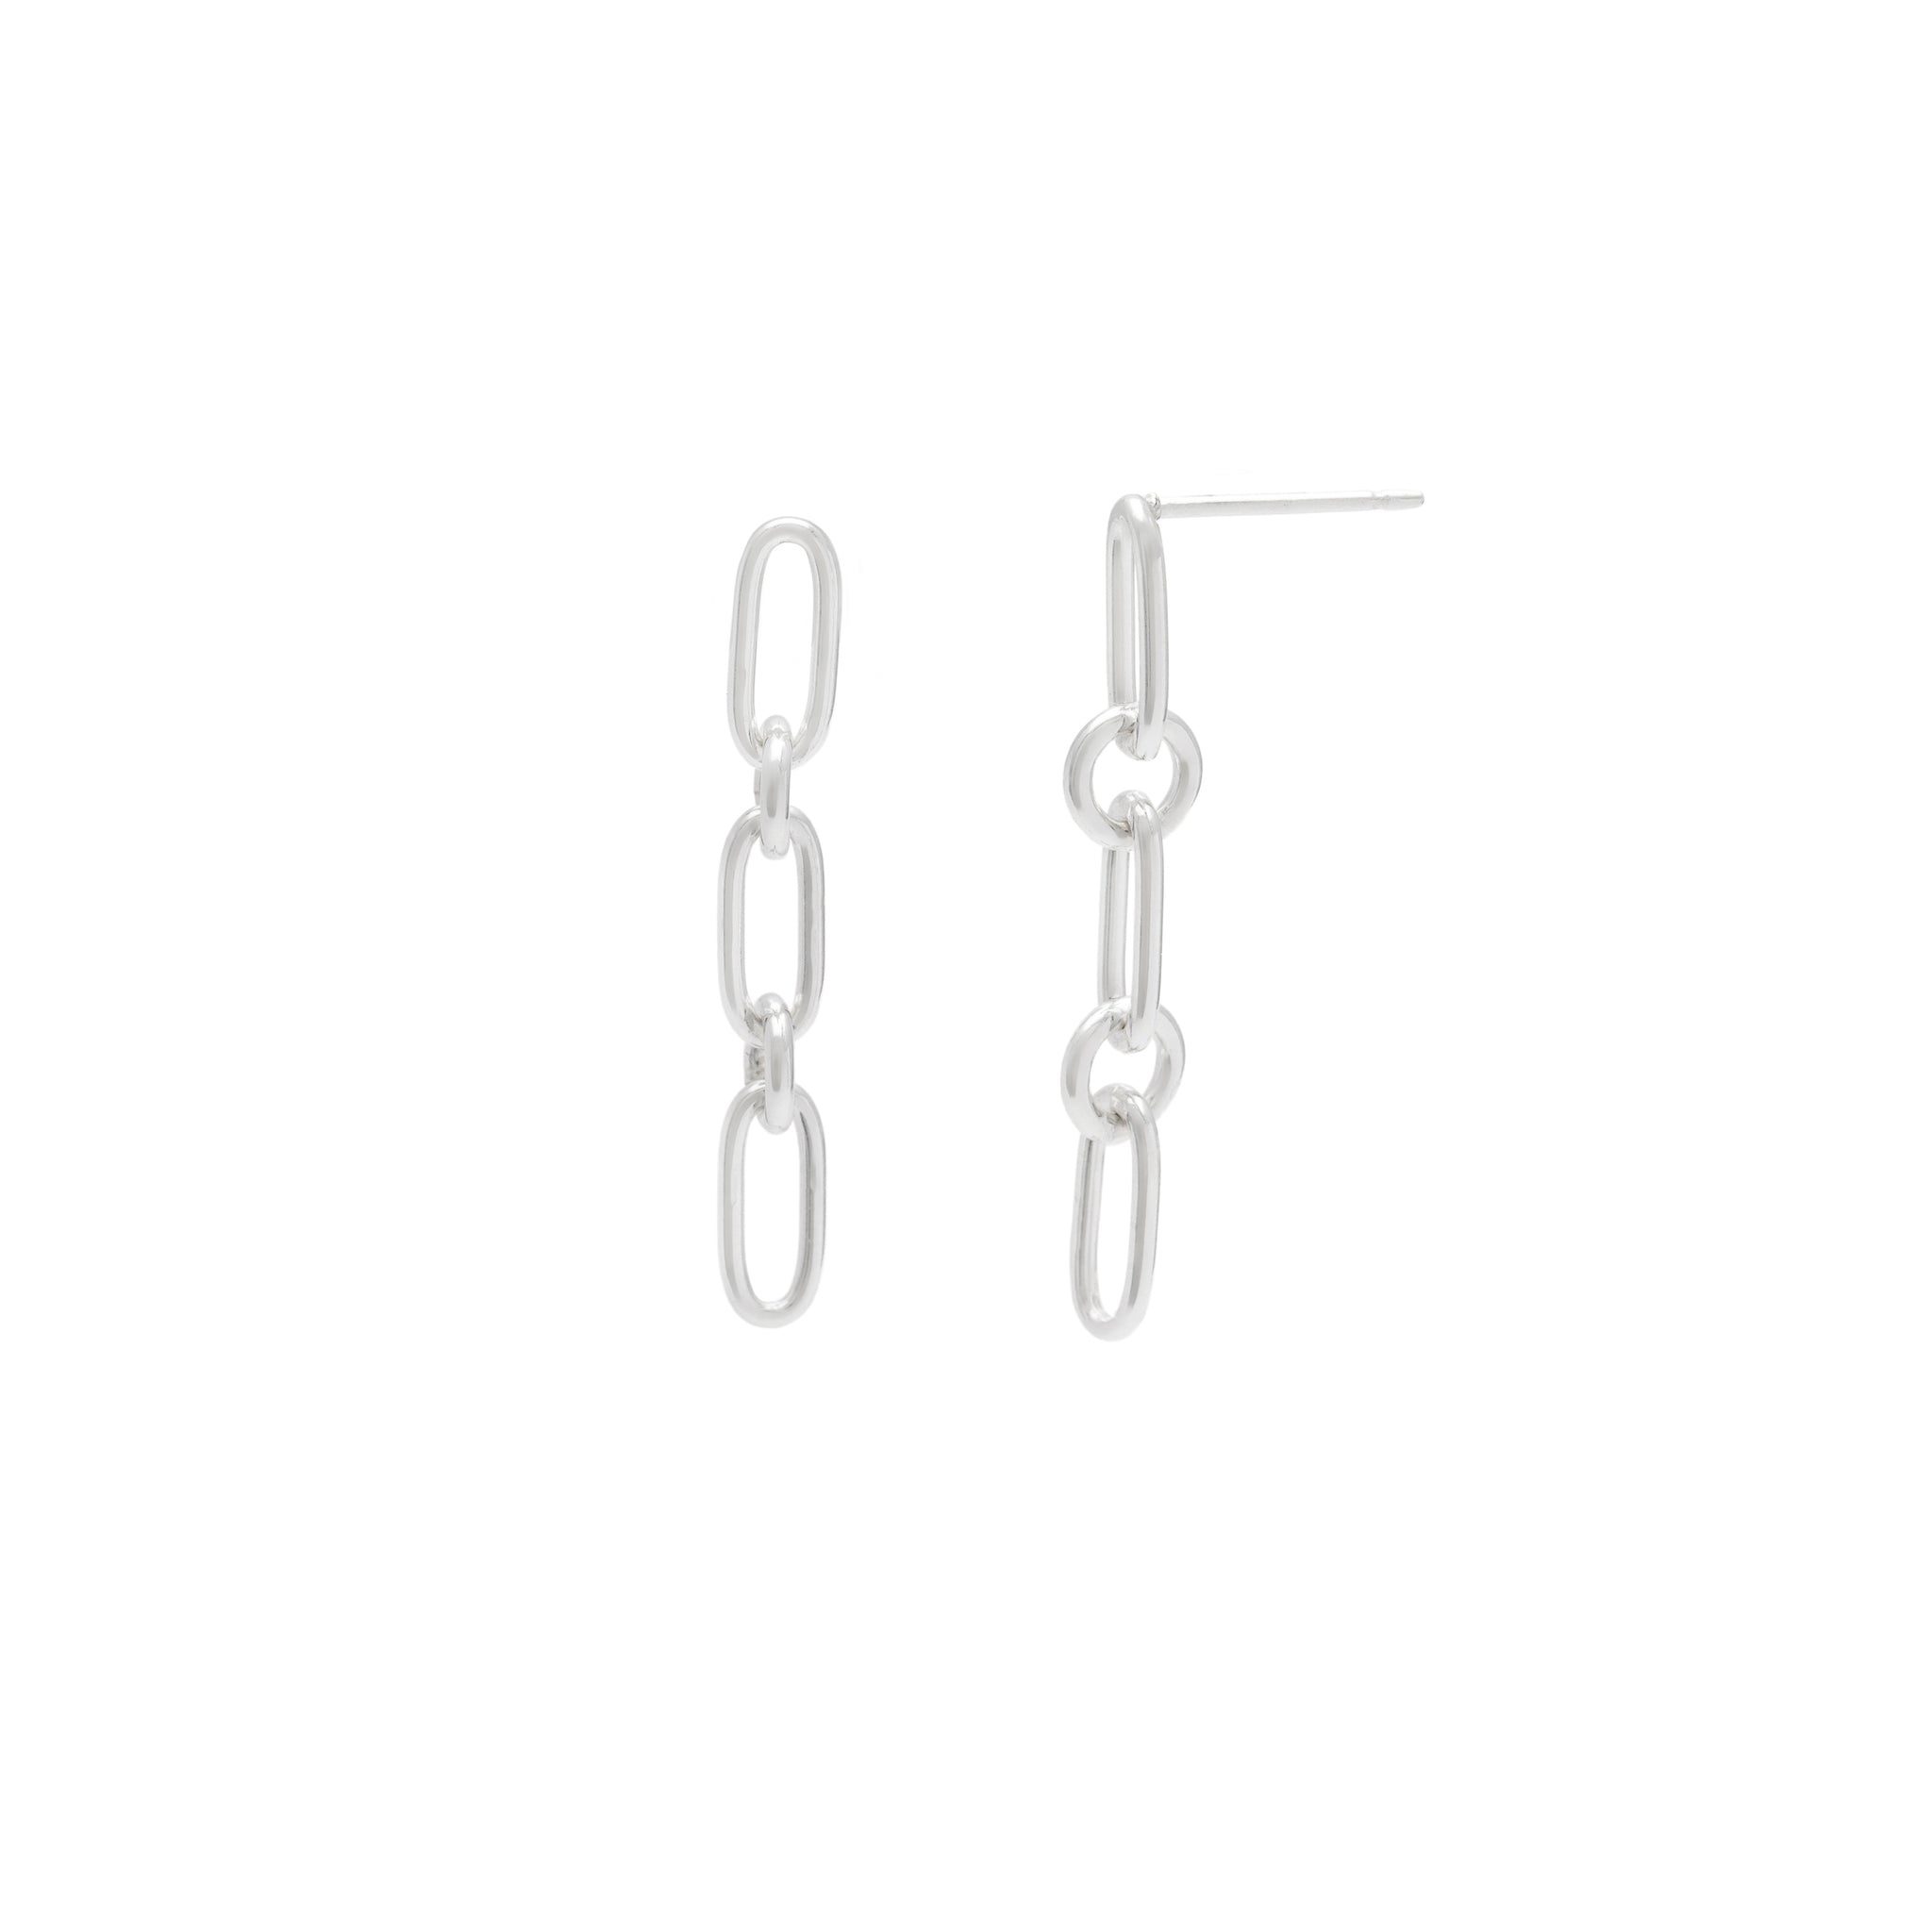 Medium Link Chain Earrings